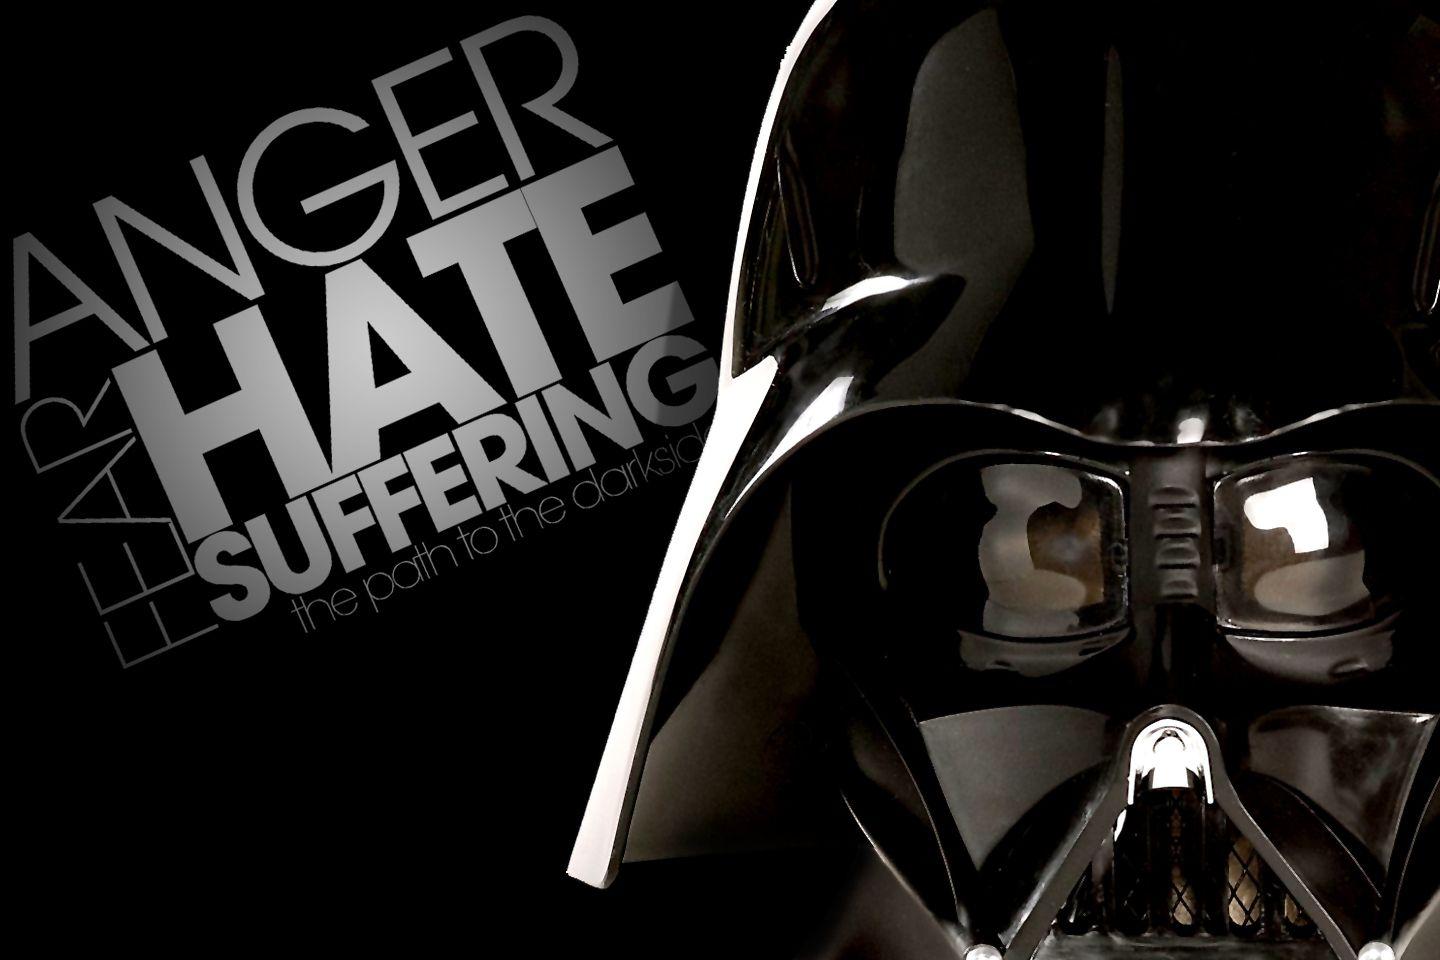 Star Wars image Darth Vader HD wallpaper and background photo